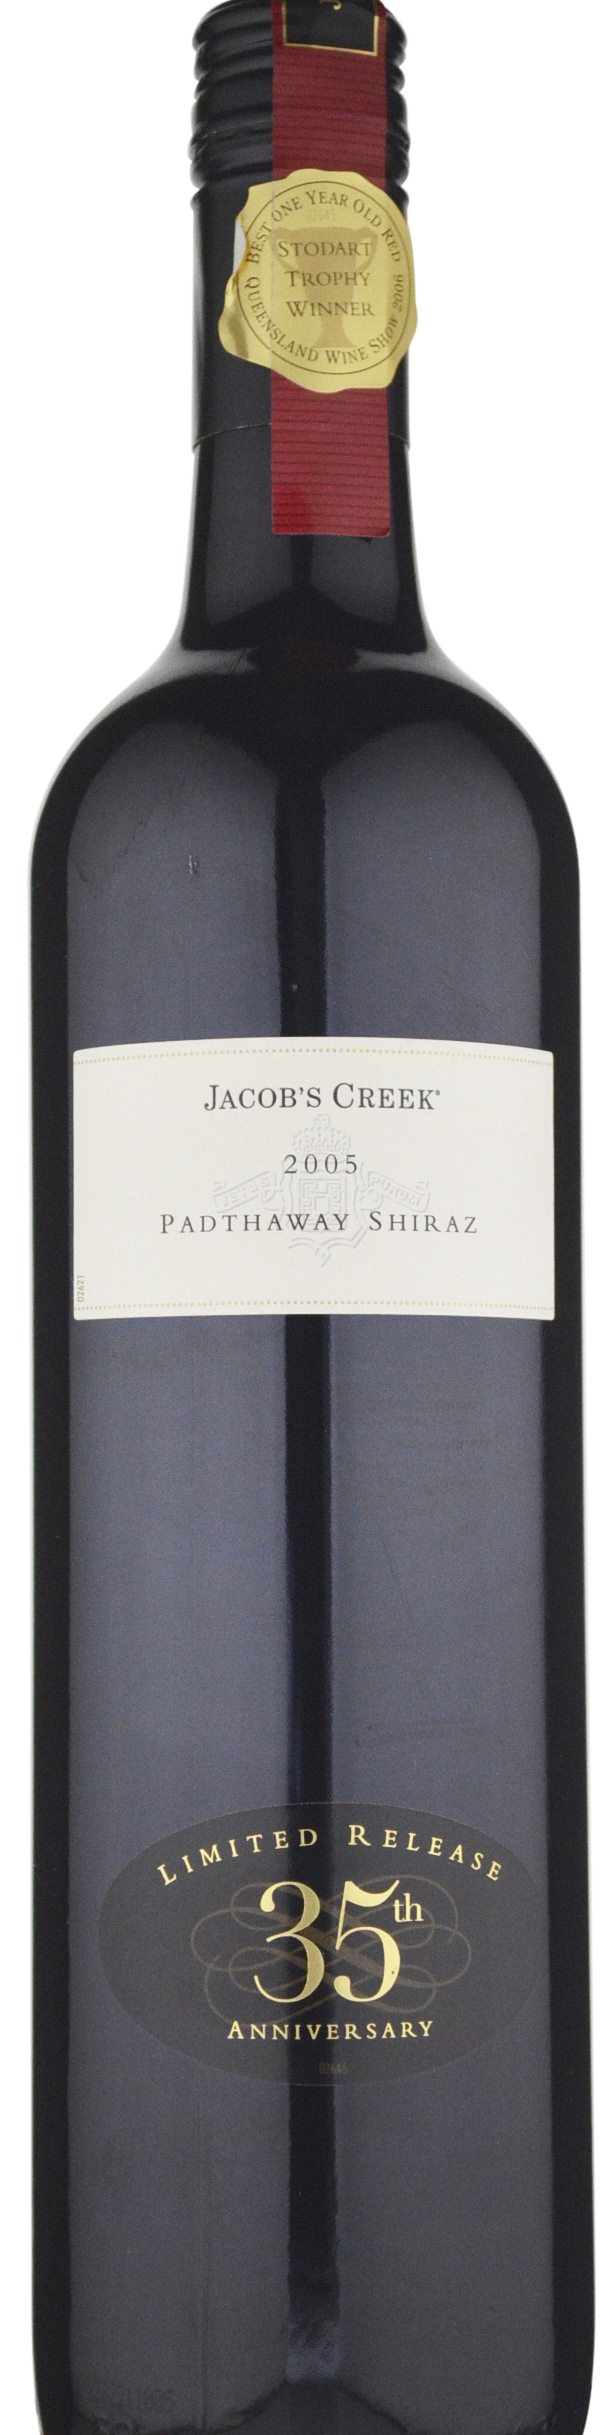 Jacob's Creek Limited Release 35th Anniversary Padthaway Shiraz 2005